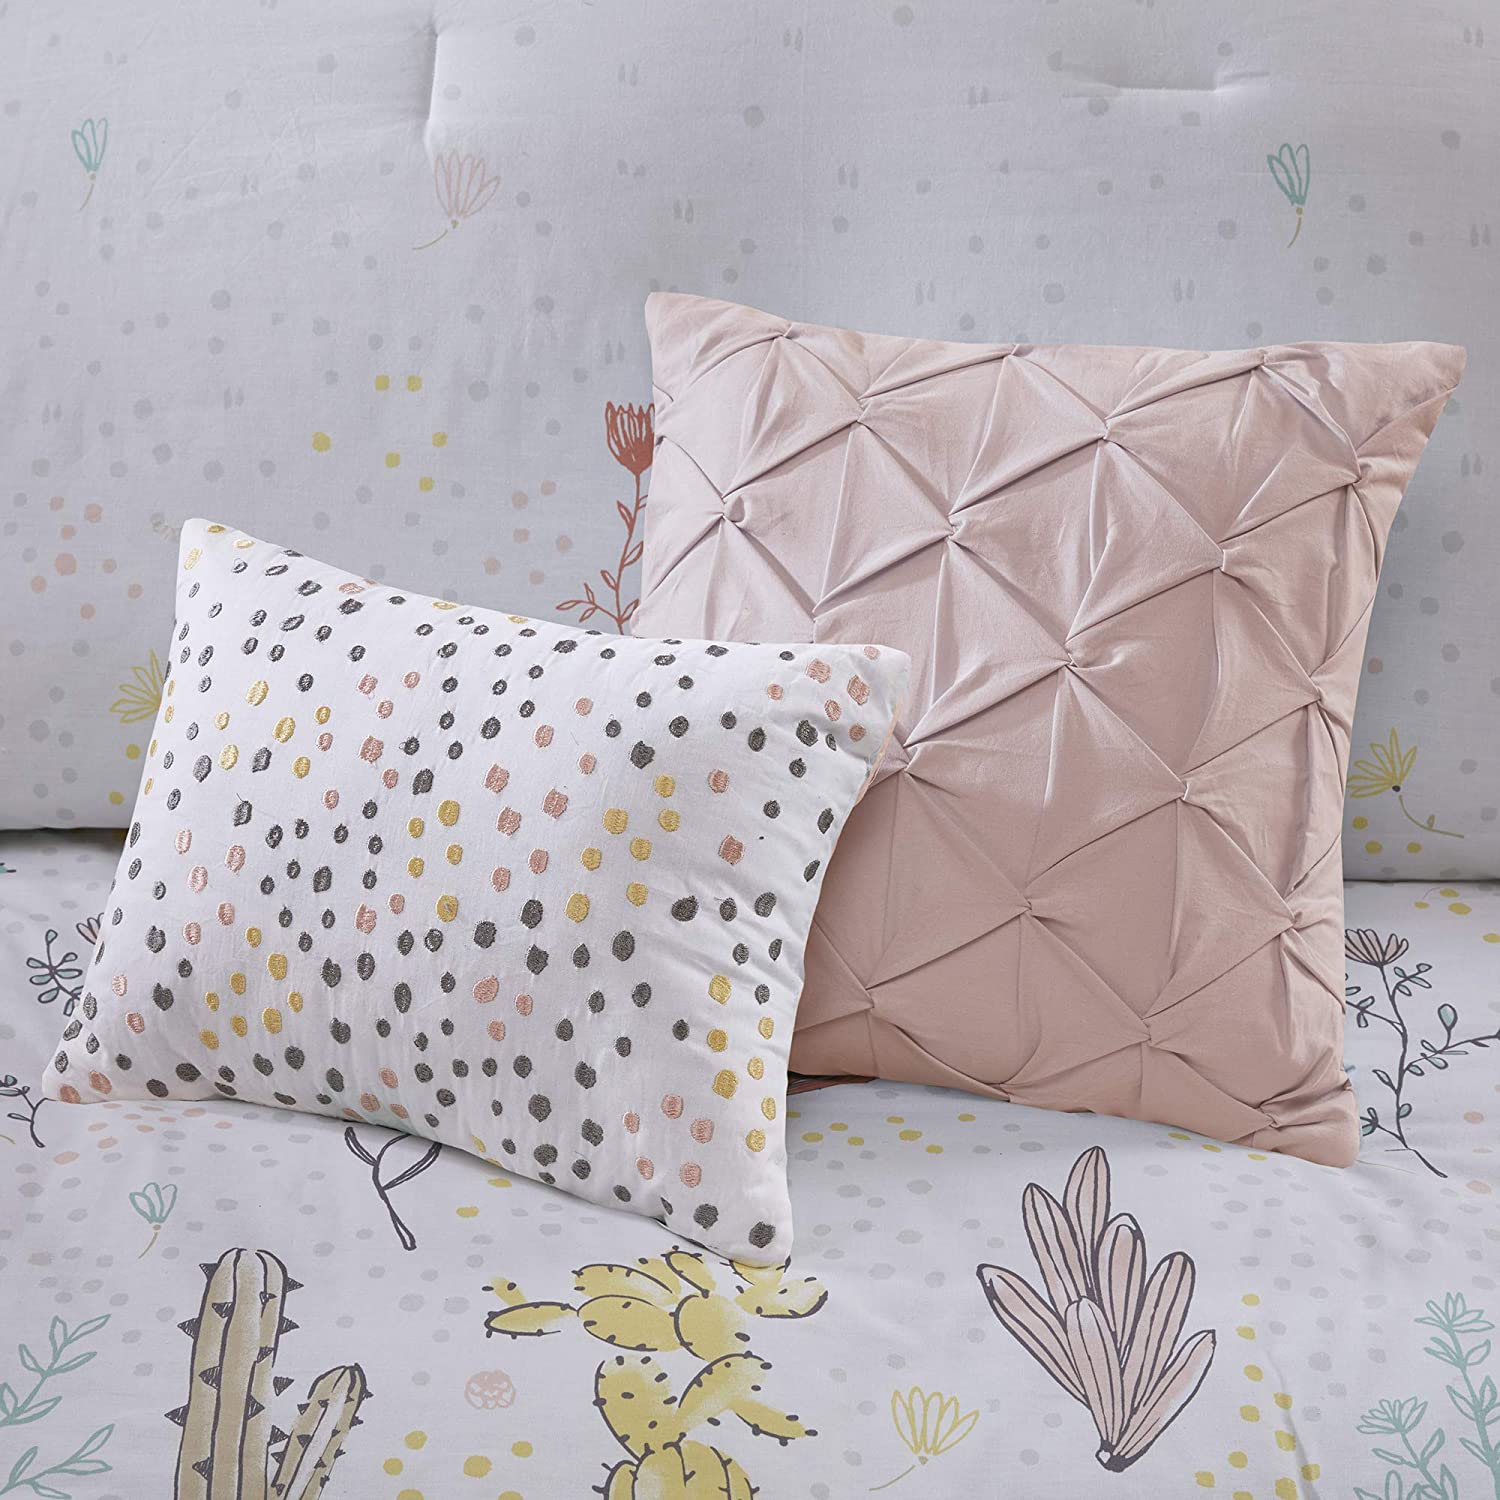 Urban Habitat Kids 100% Cotton Comforter Set - Fun Print and Vibrant Color Modern Design All Season Cozy Bedding, Matching Shams, Decorative Pillow, Full/Queen, Desert Bloom Multi with 2 dec pillows